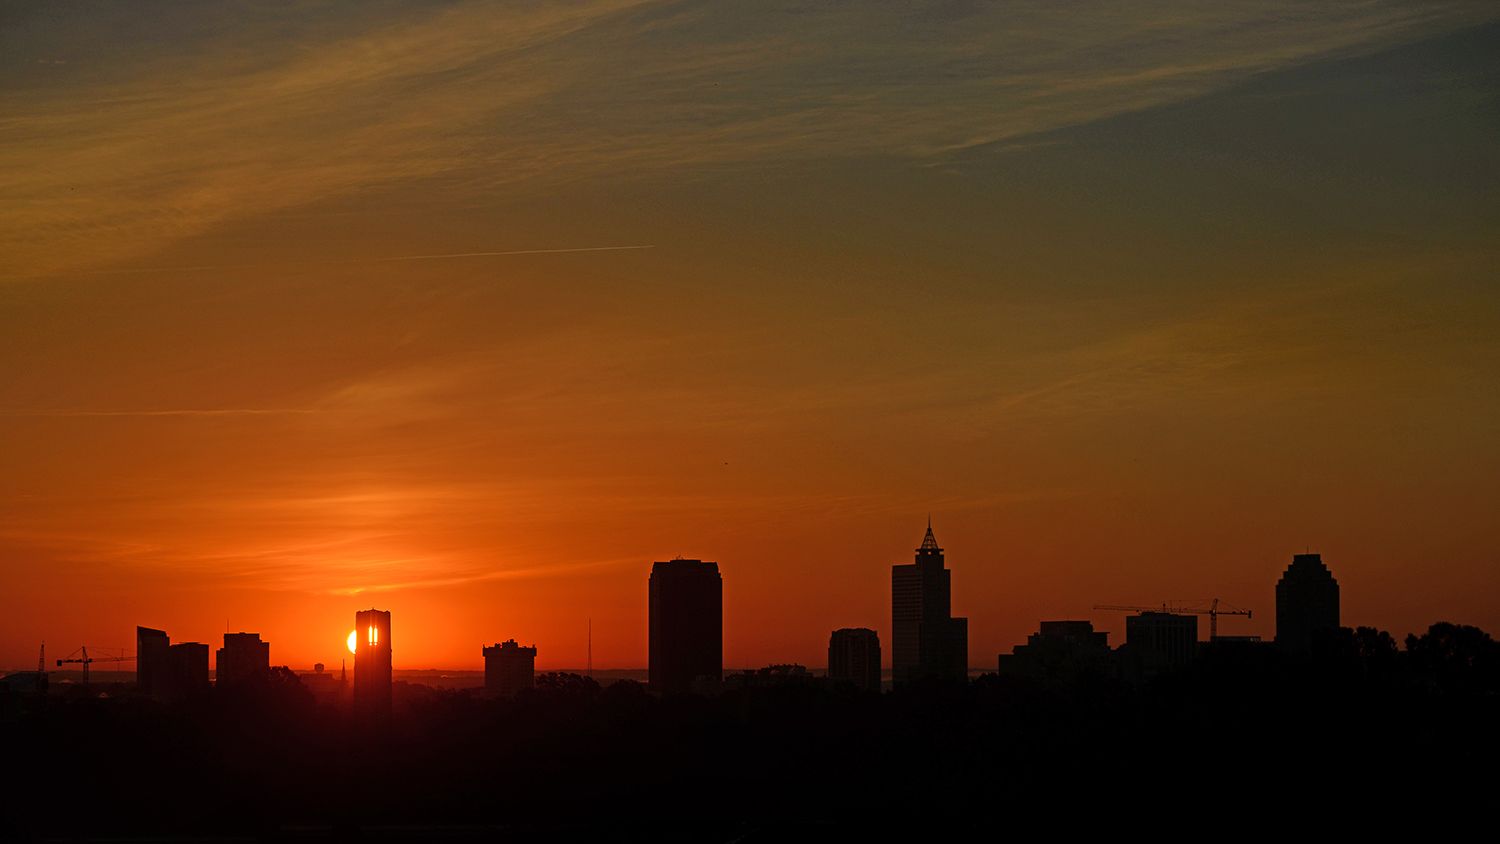 Sun rise silhouettes the Raleigh skyline